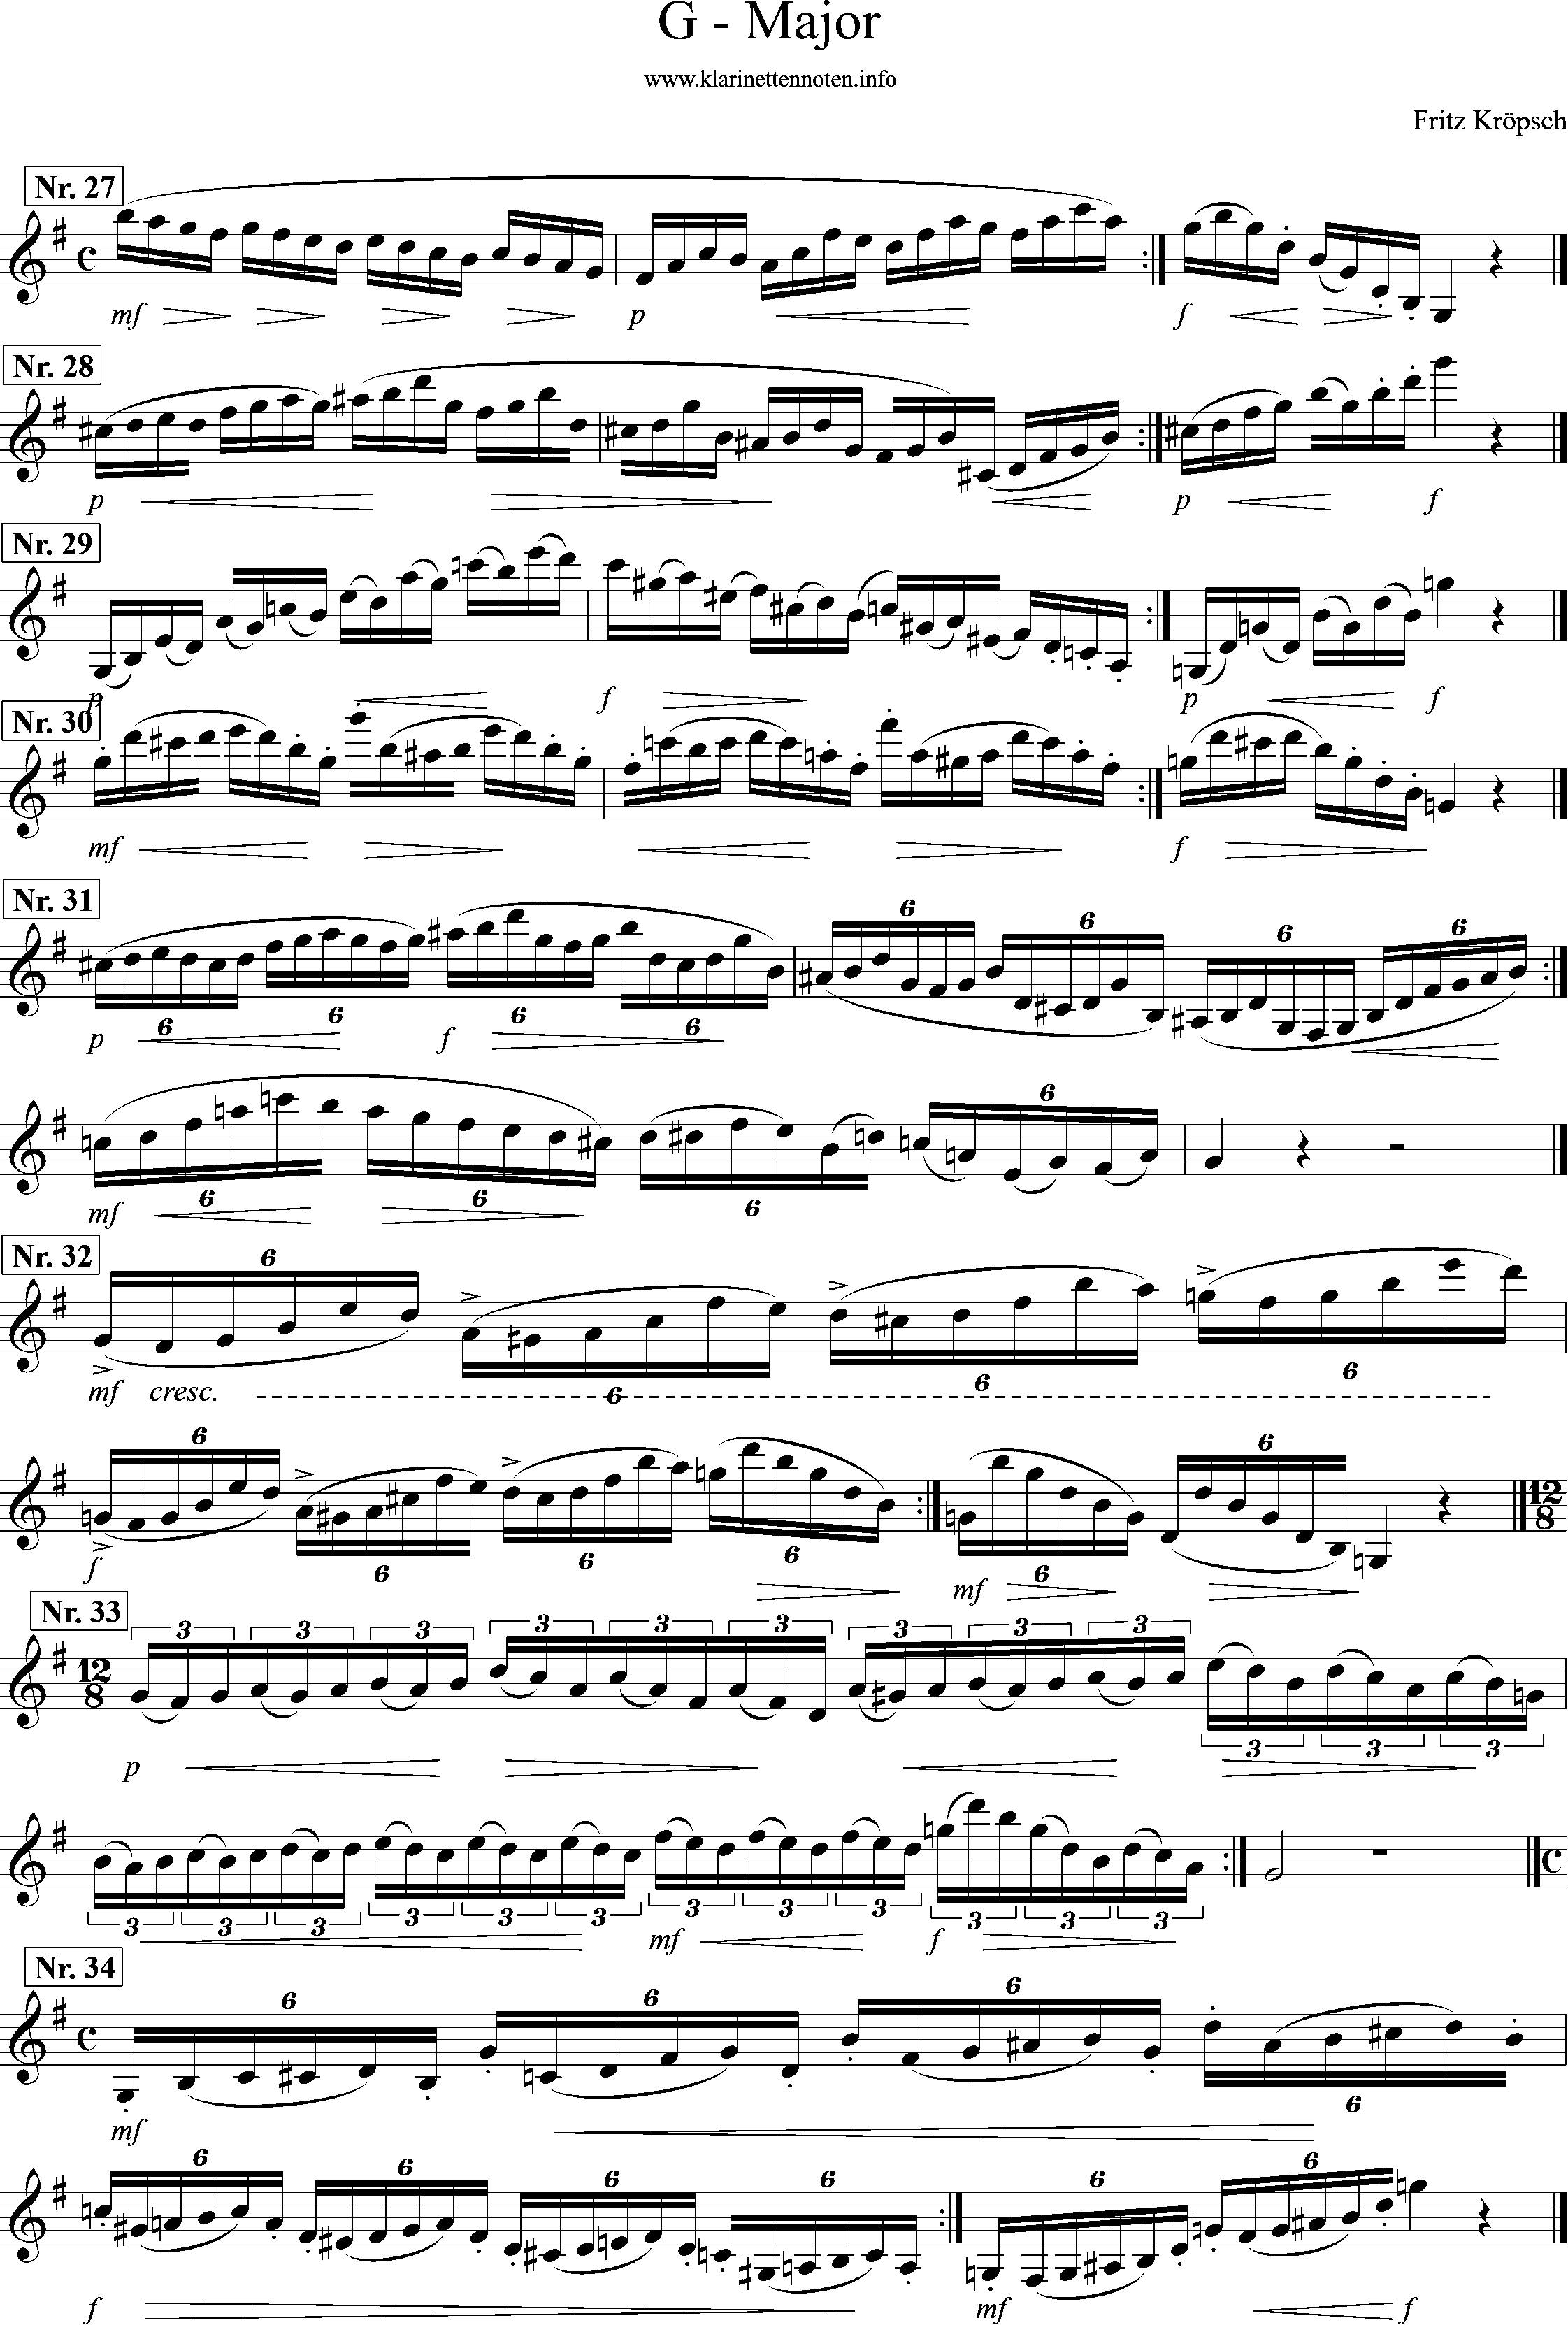 kröpsch, 416 Etüden, G-Major, Seite 1